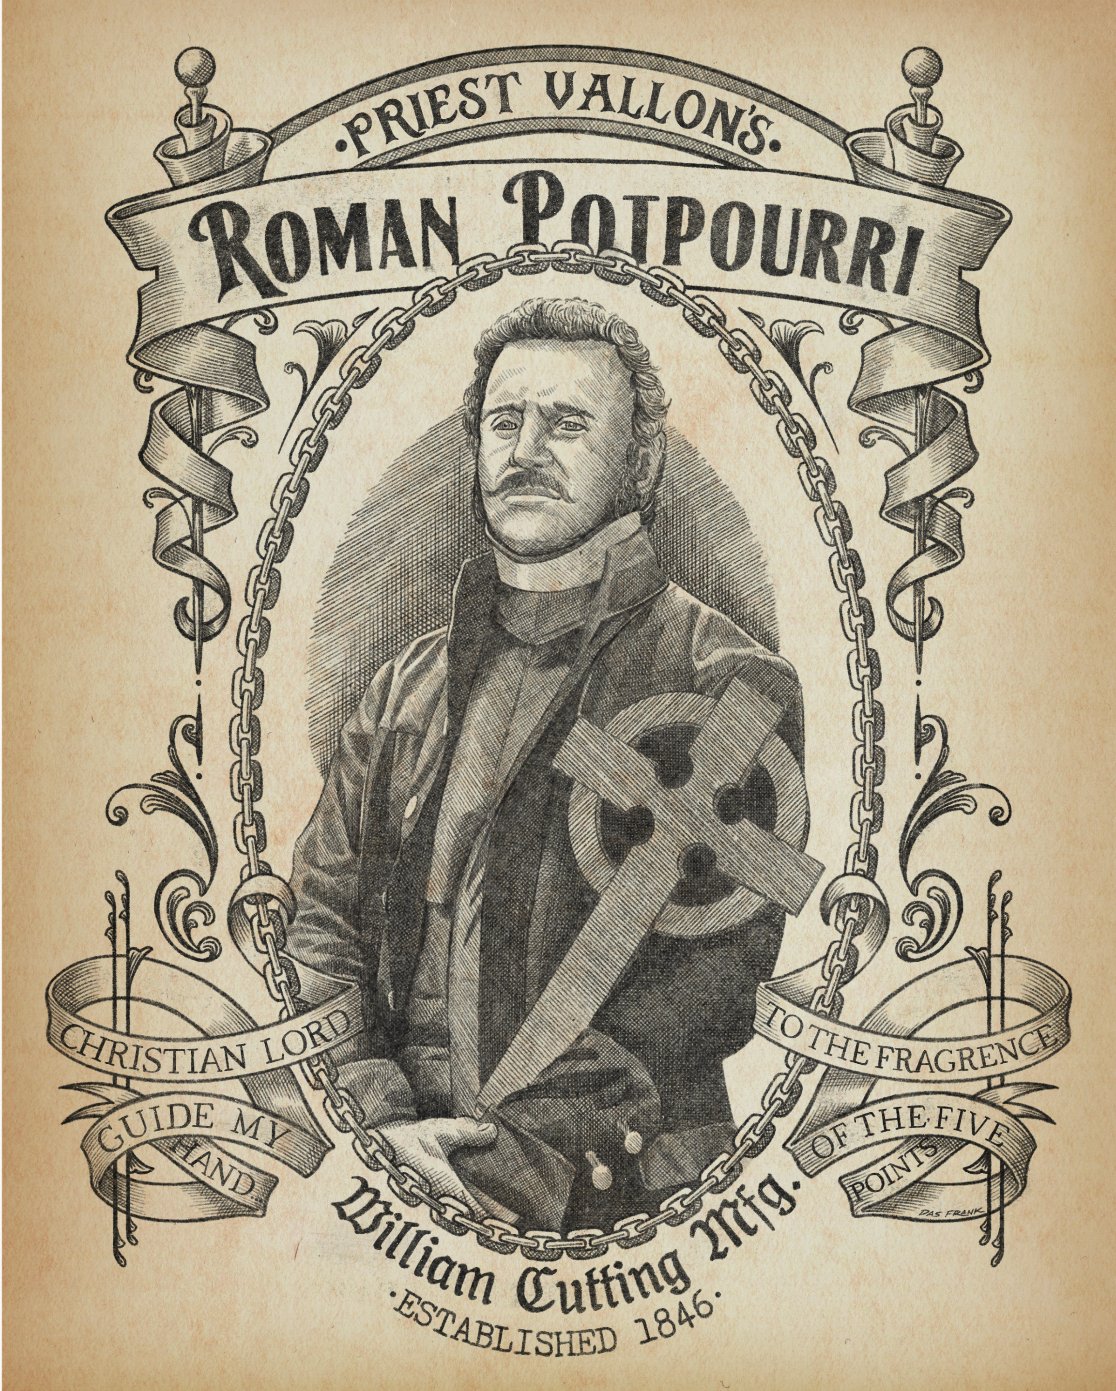 Roman Potpourri